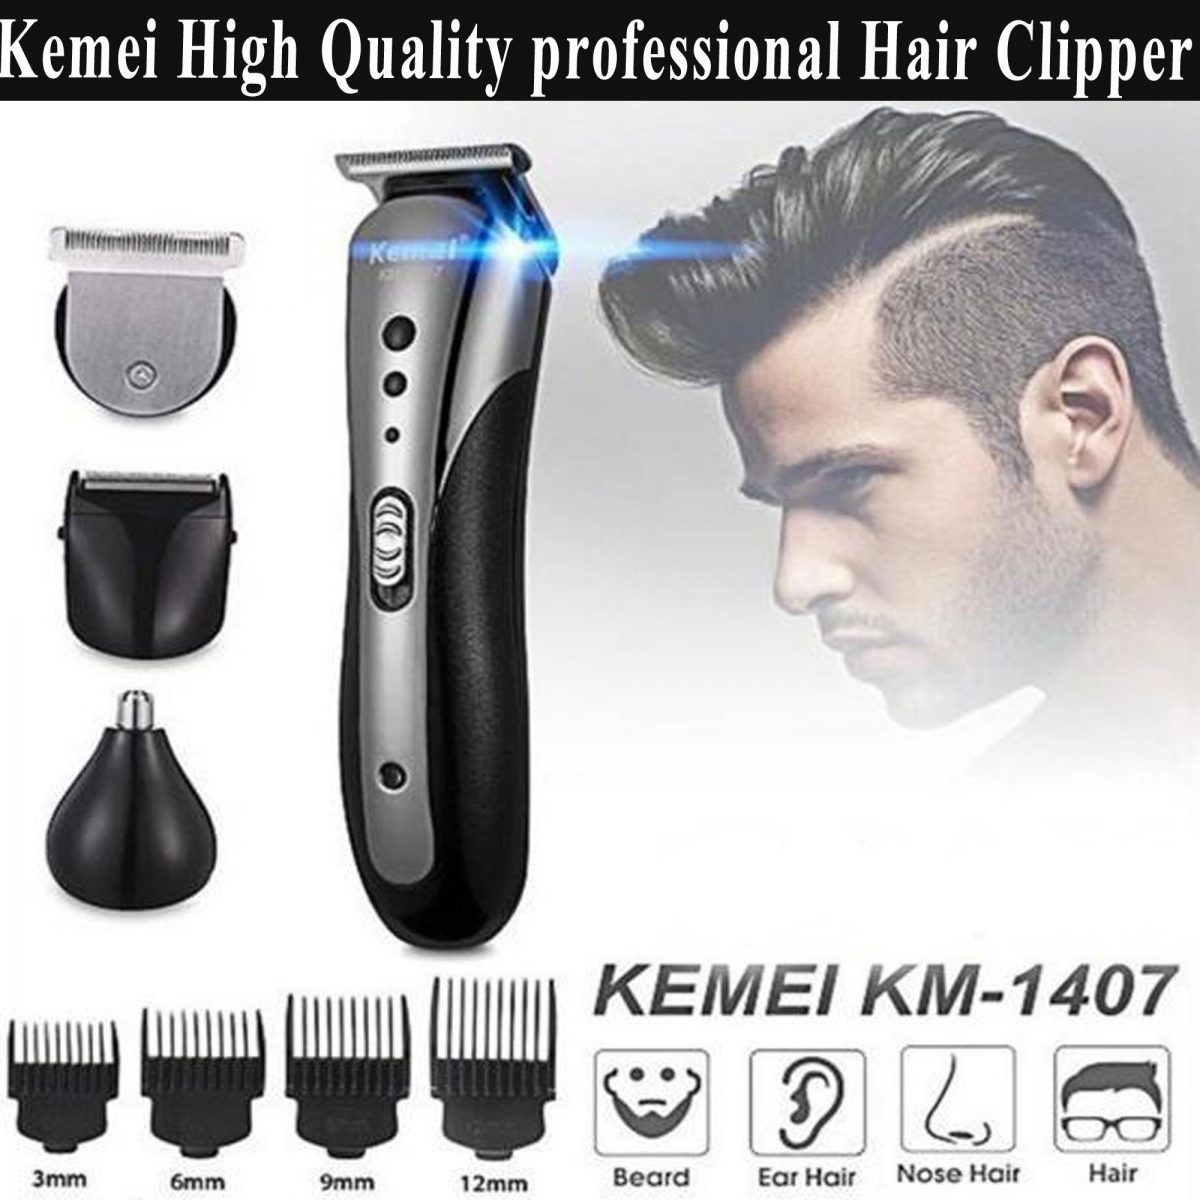 kemei professional hair clipper price